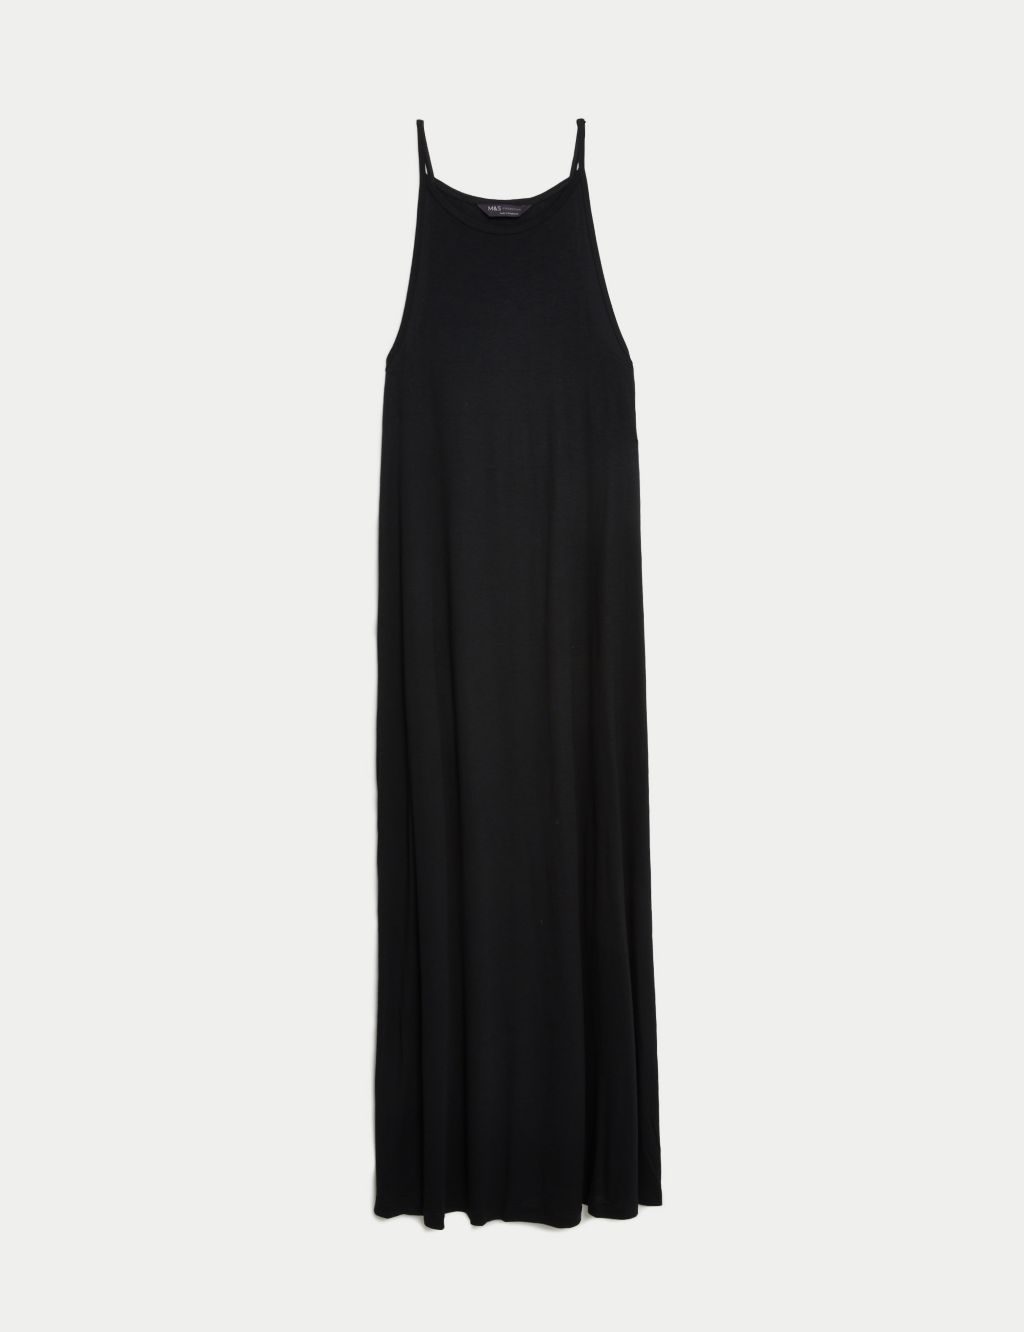 Buy Jersey Halter Neck Midaxi Beach Dress | M&S Collection | M&S